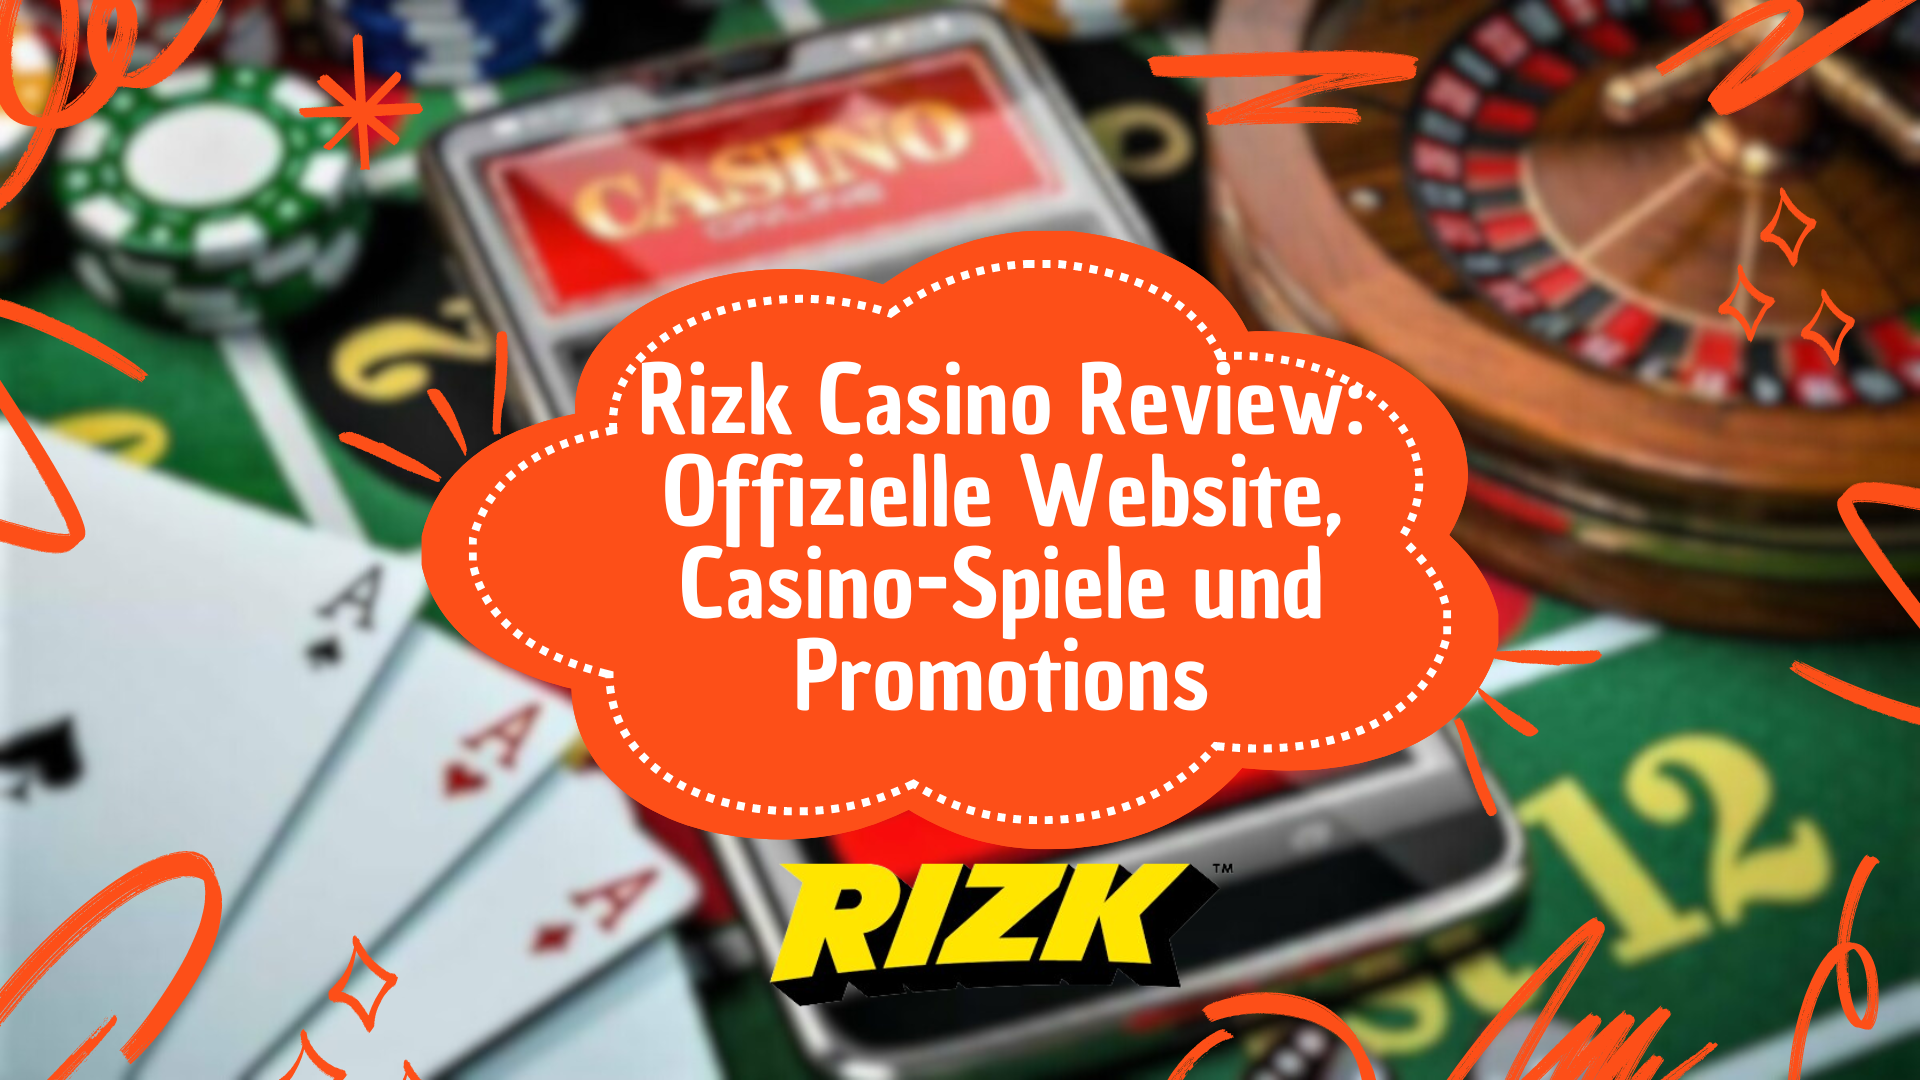 Rizk Casino Review: Offizielle Website, Casino-Spiele und Promotions